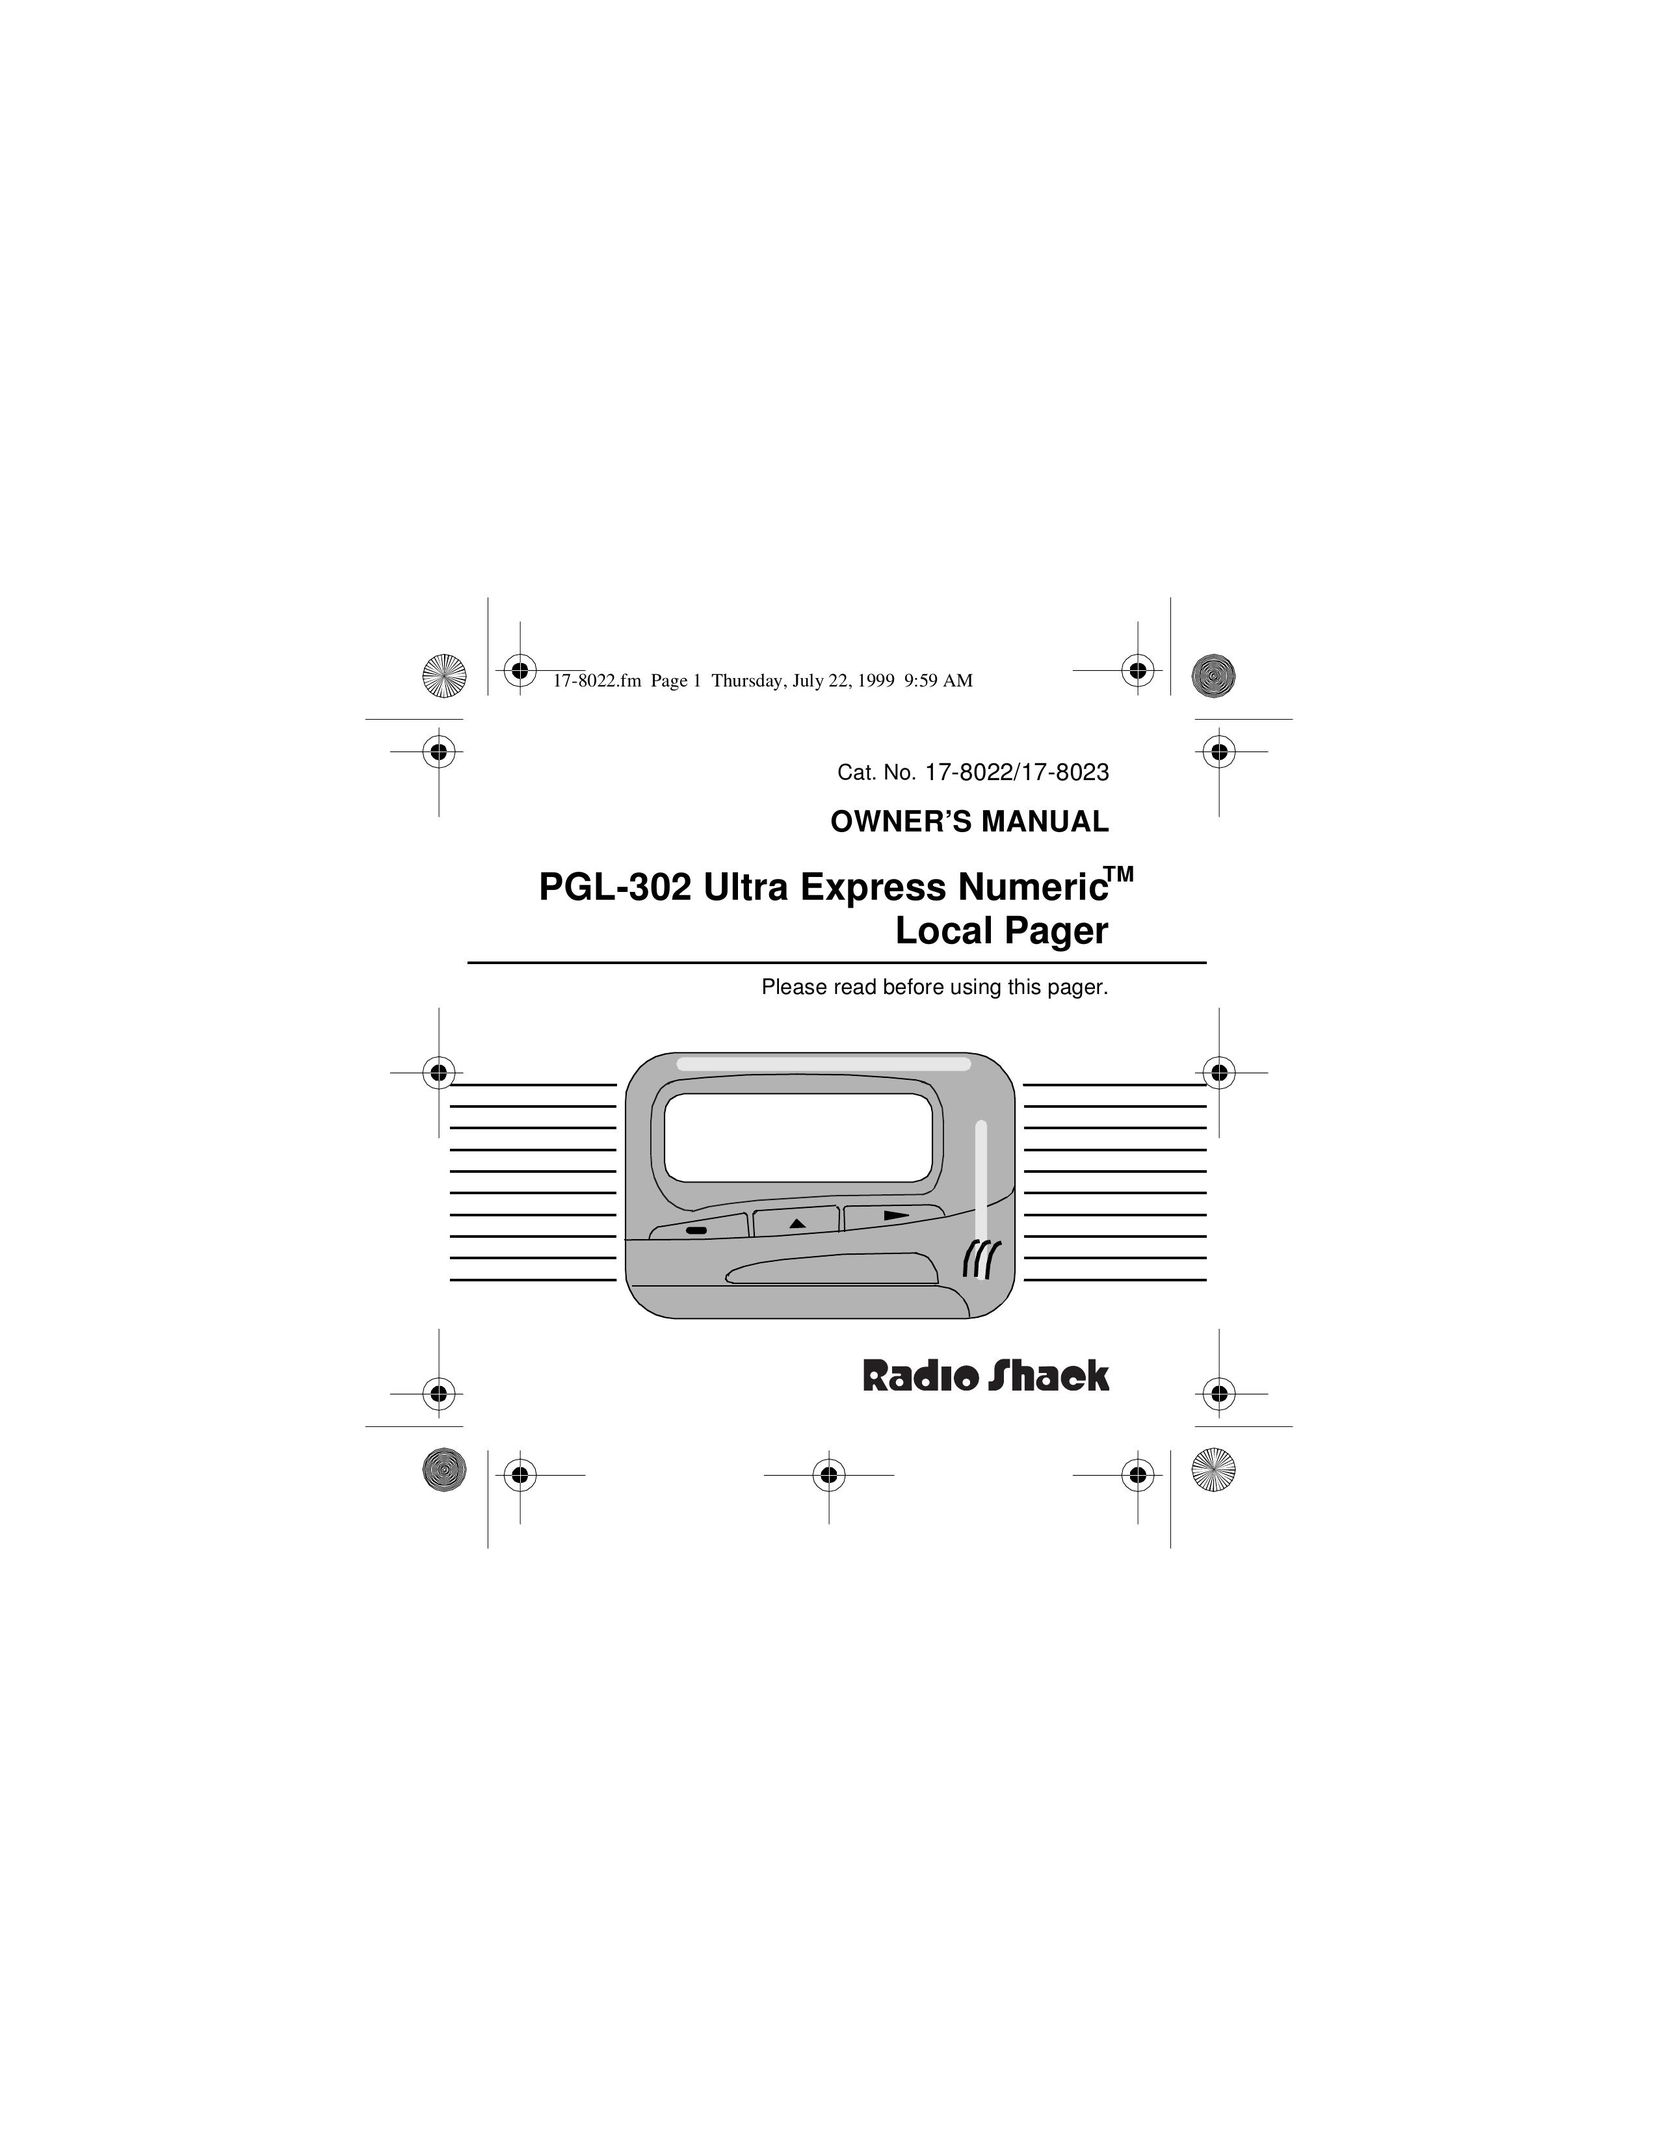 Radio Shack 17-8023 Pager User Manual